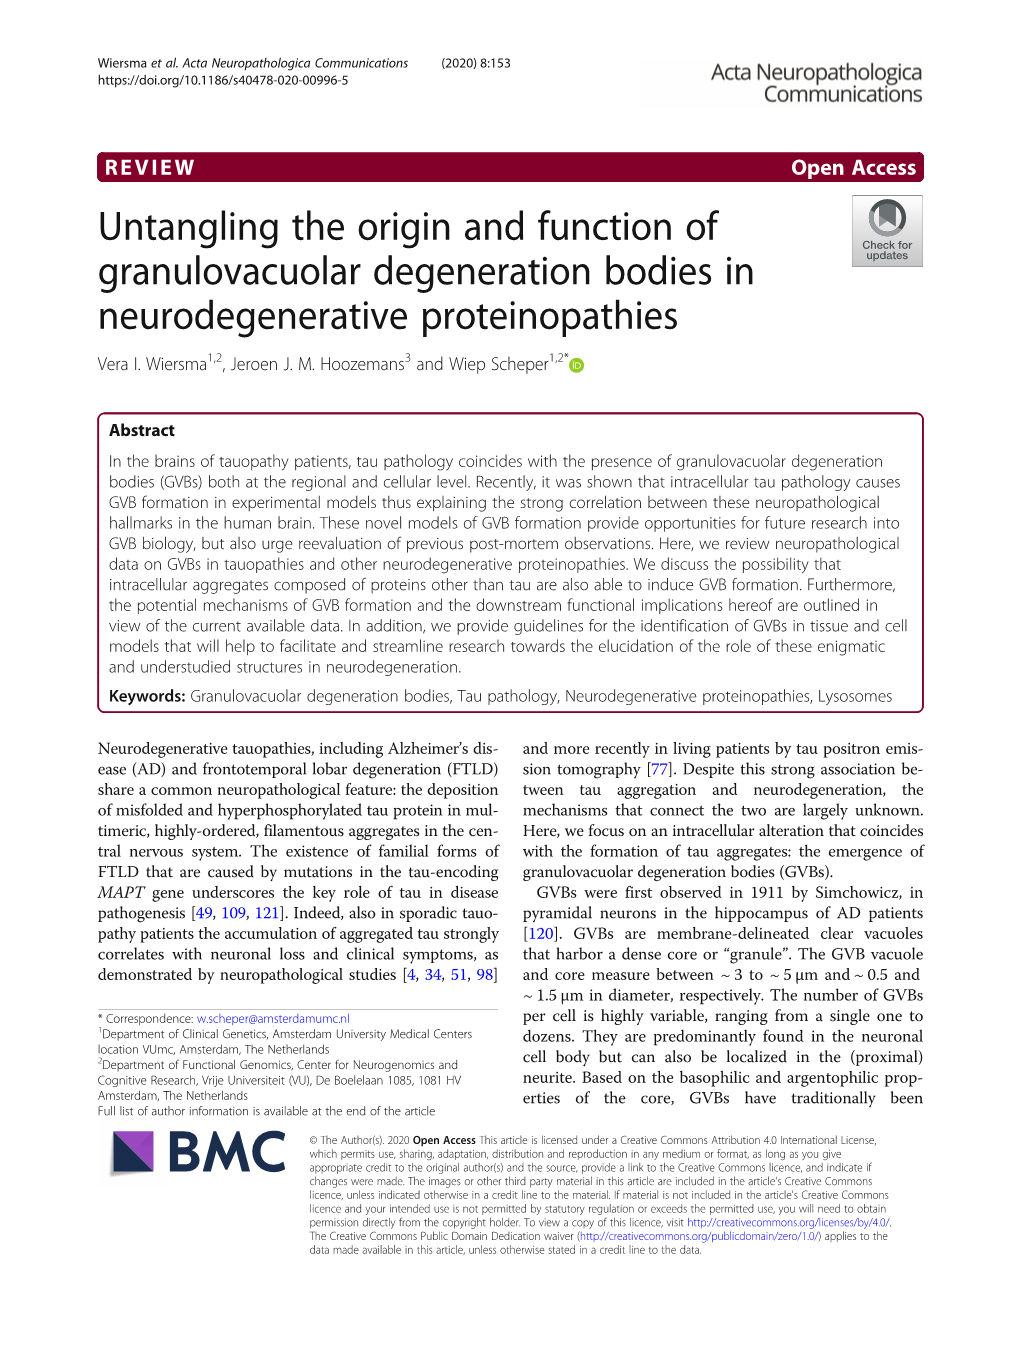 Untangling the Origin and Function of Granulovacuolar Degeneration Bodies in Neurodegenerative Proteinopathies Vera I